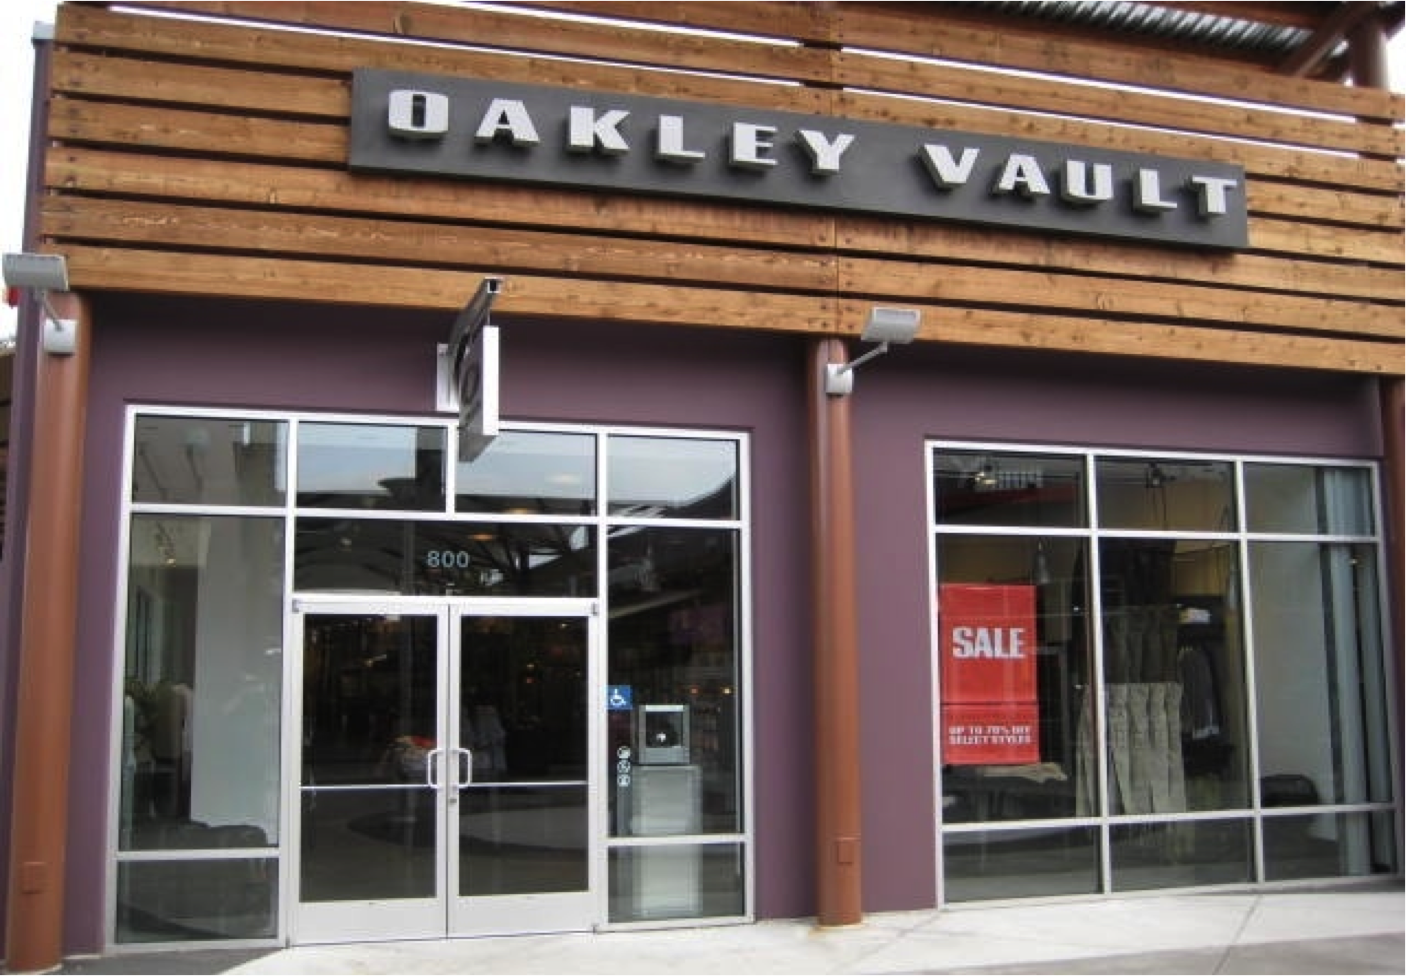 Oakley Seattle Stores « Heritage Malta